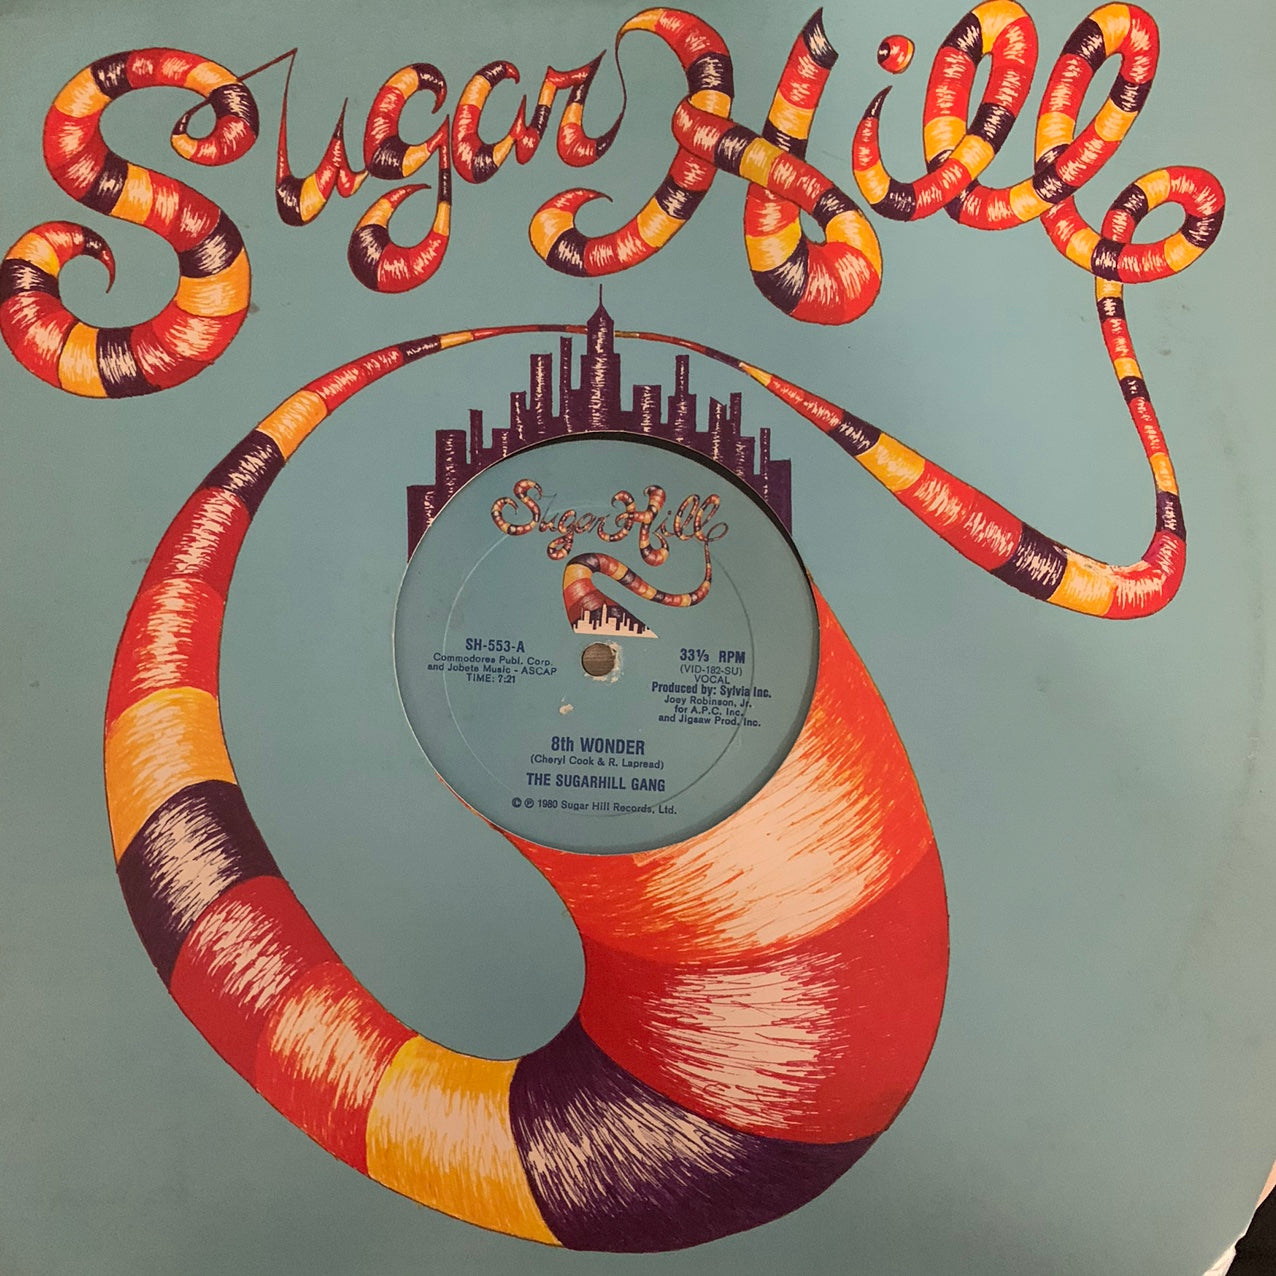 The Hill “8th Wonder” / “Sugar Hill 2 Track 12inch – Classic wax records